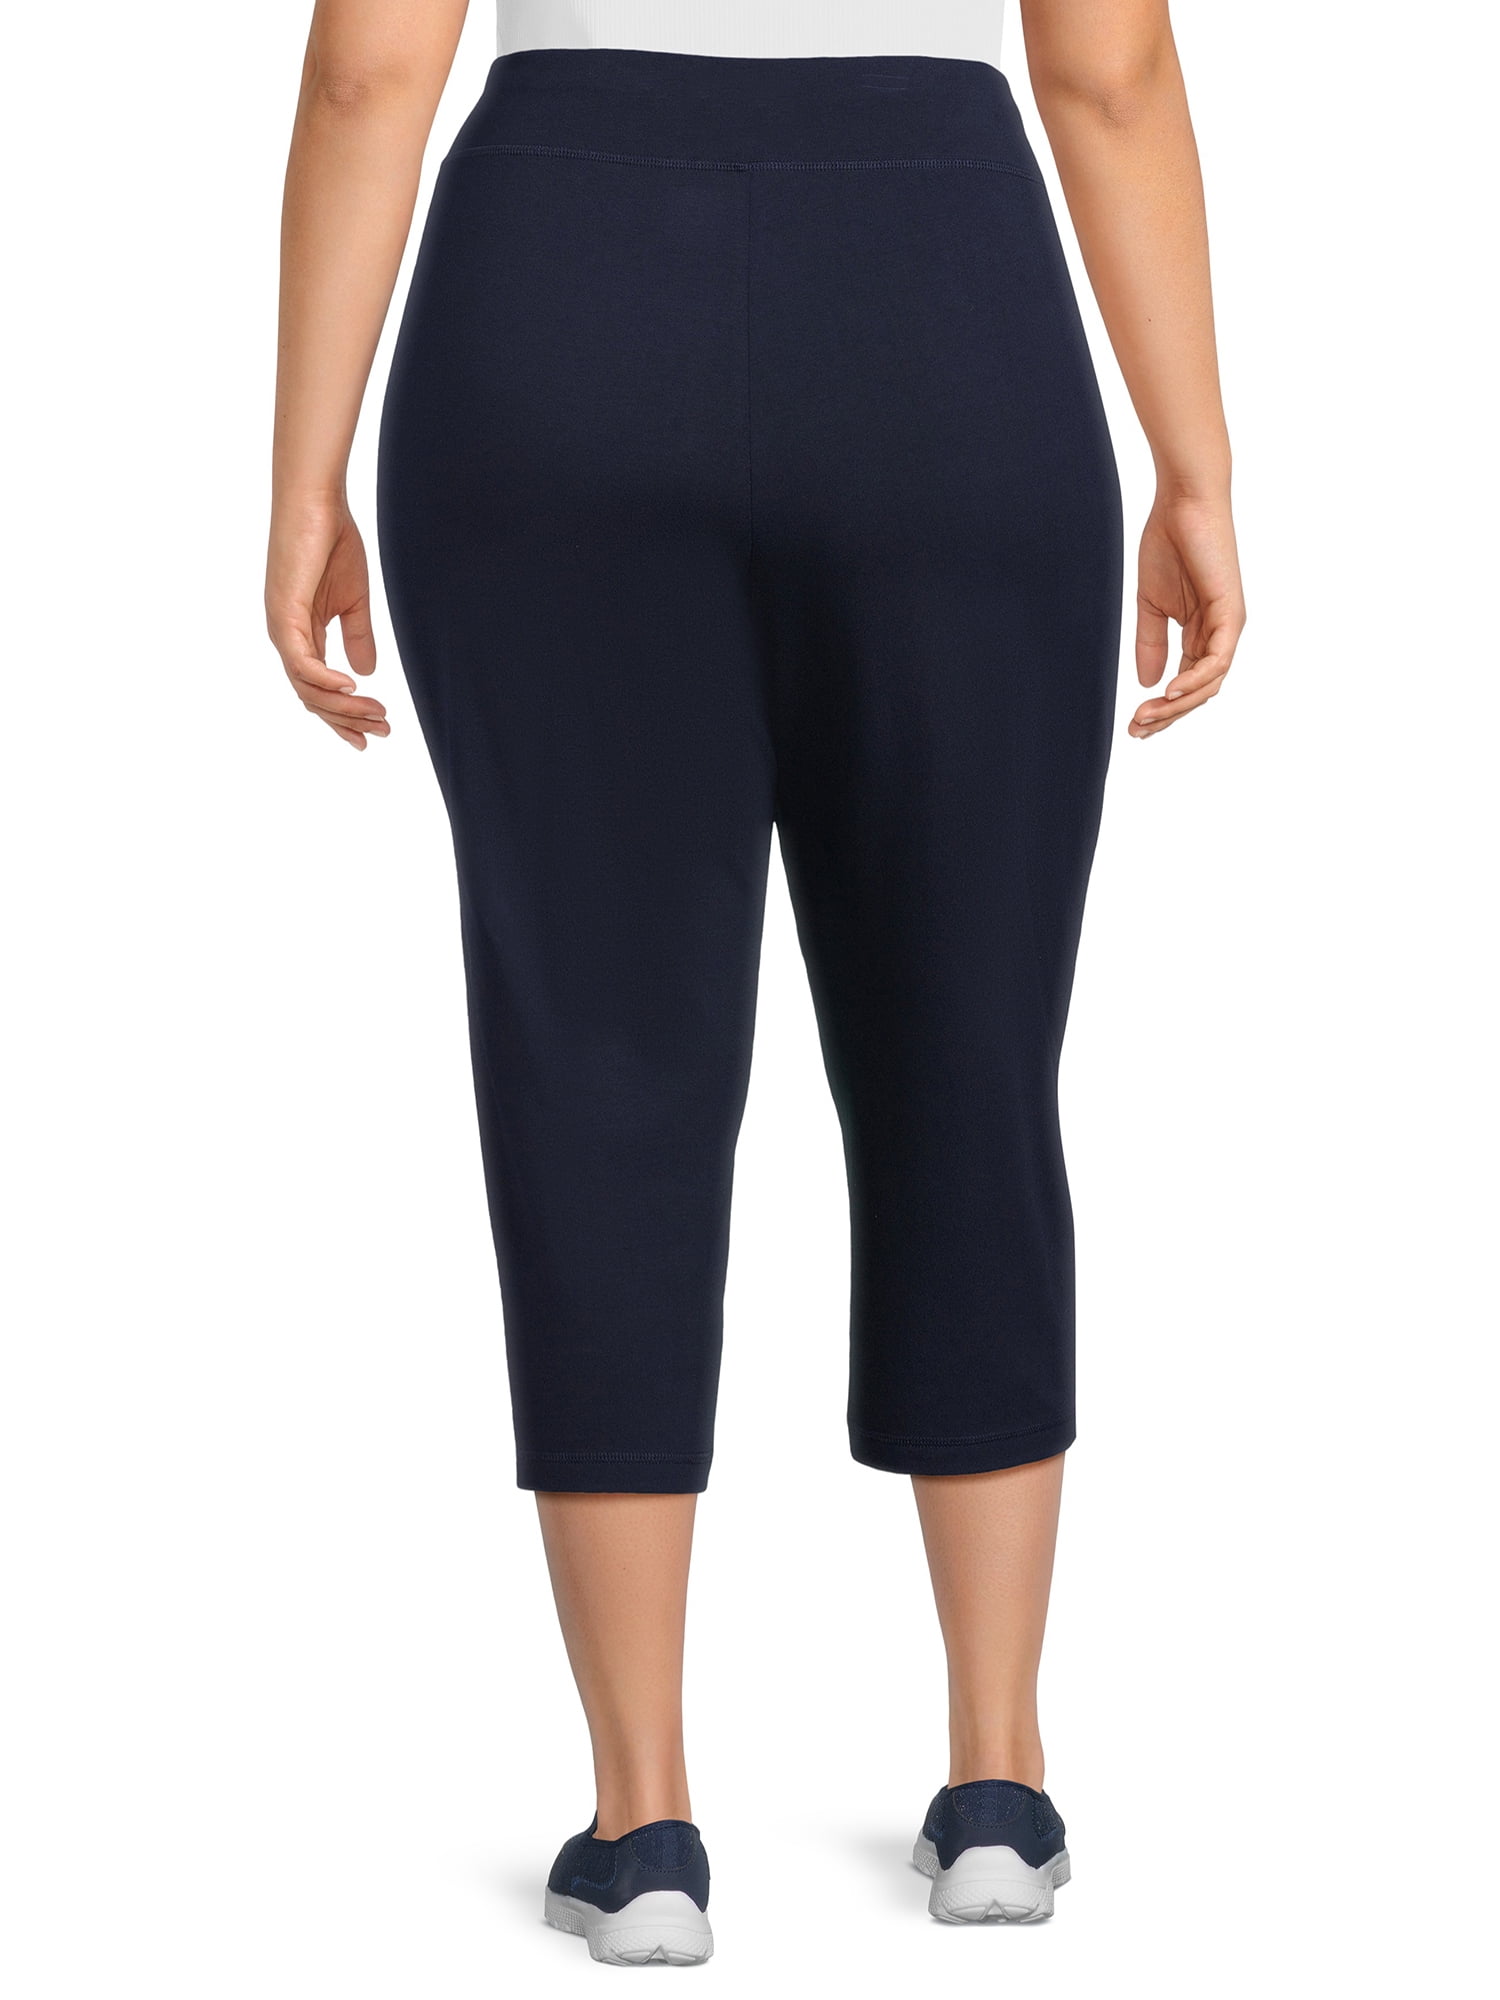 Athletic Works Women's Athleisure Core Knit Capri Pant Size XS (0